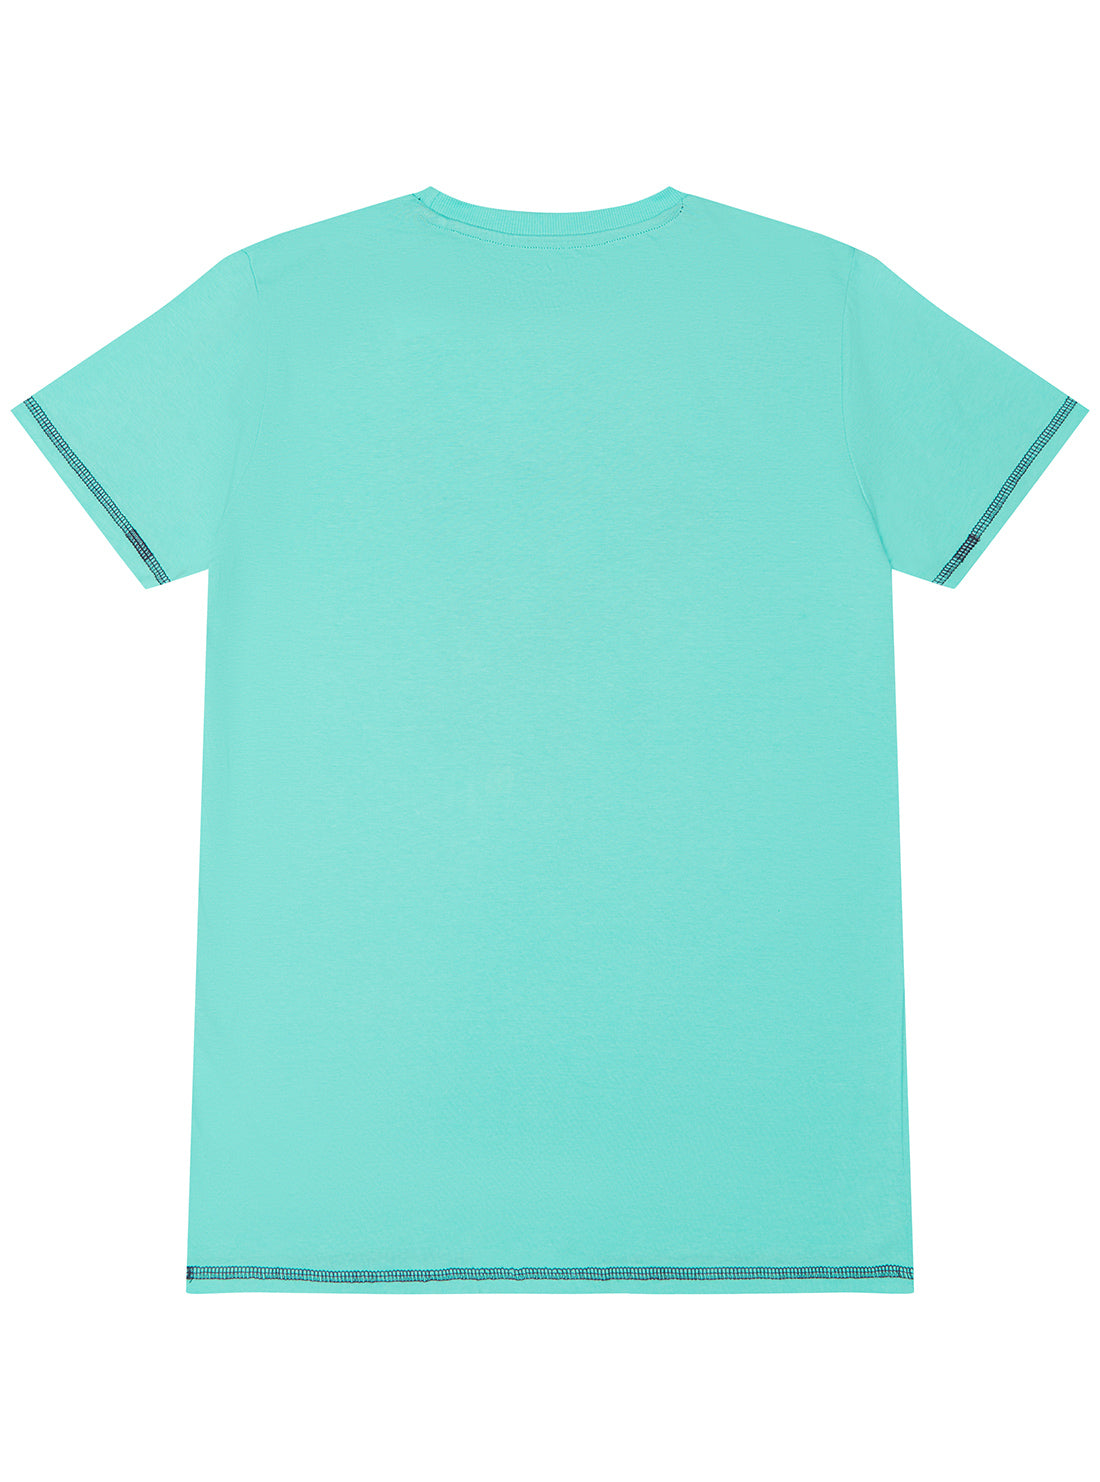 GUESS Pool Blue Logo T-Shirt (7-16) back view